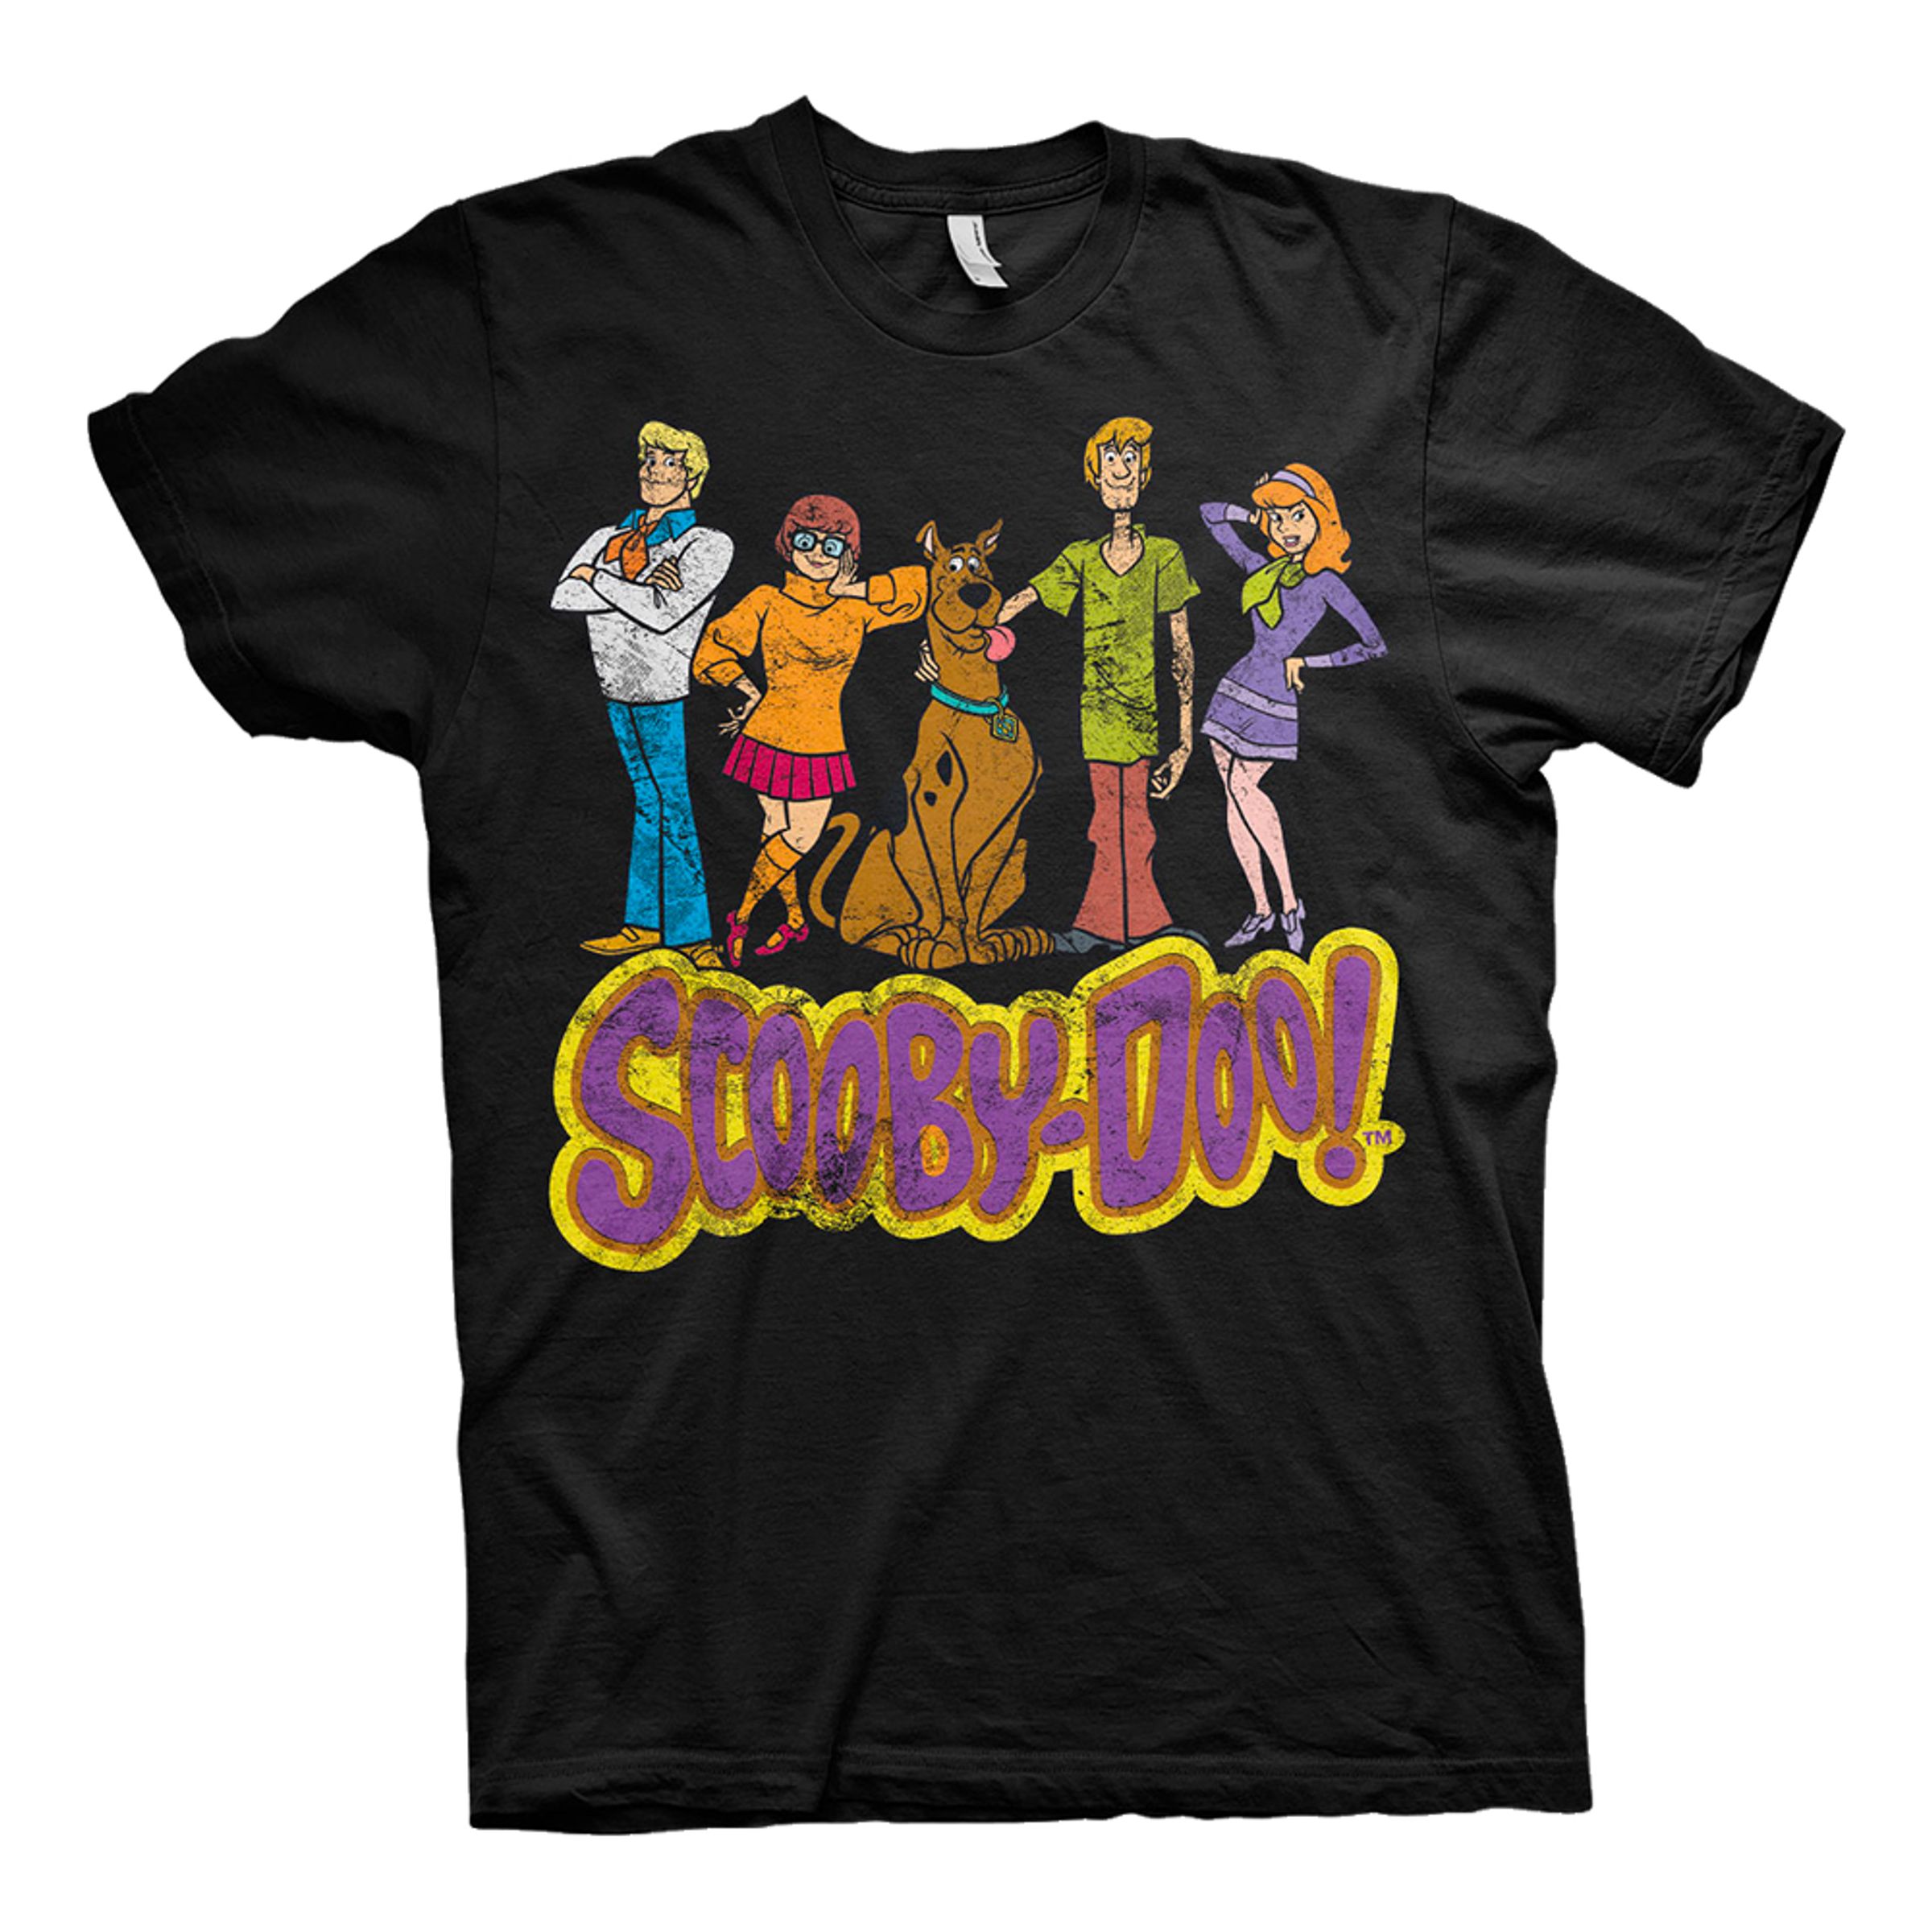 Scooby-Doo T-shirt - X-Large